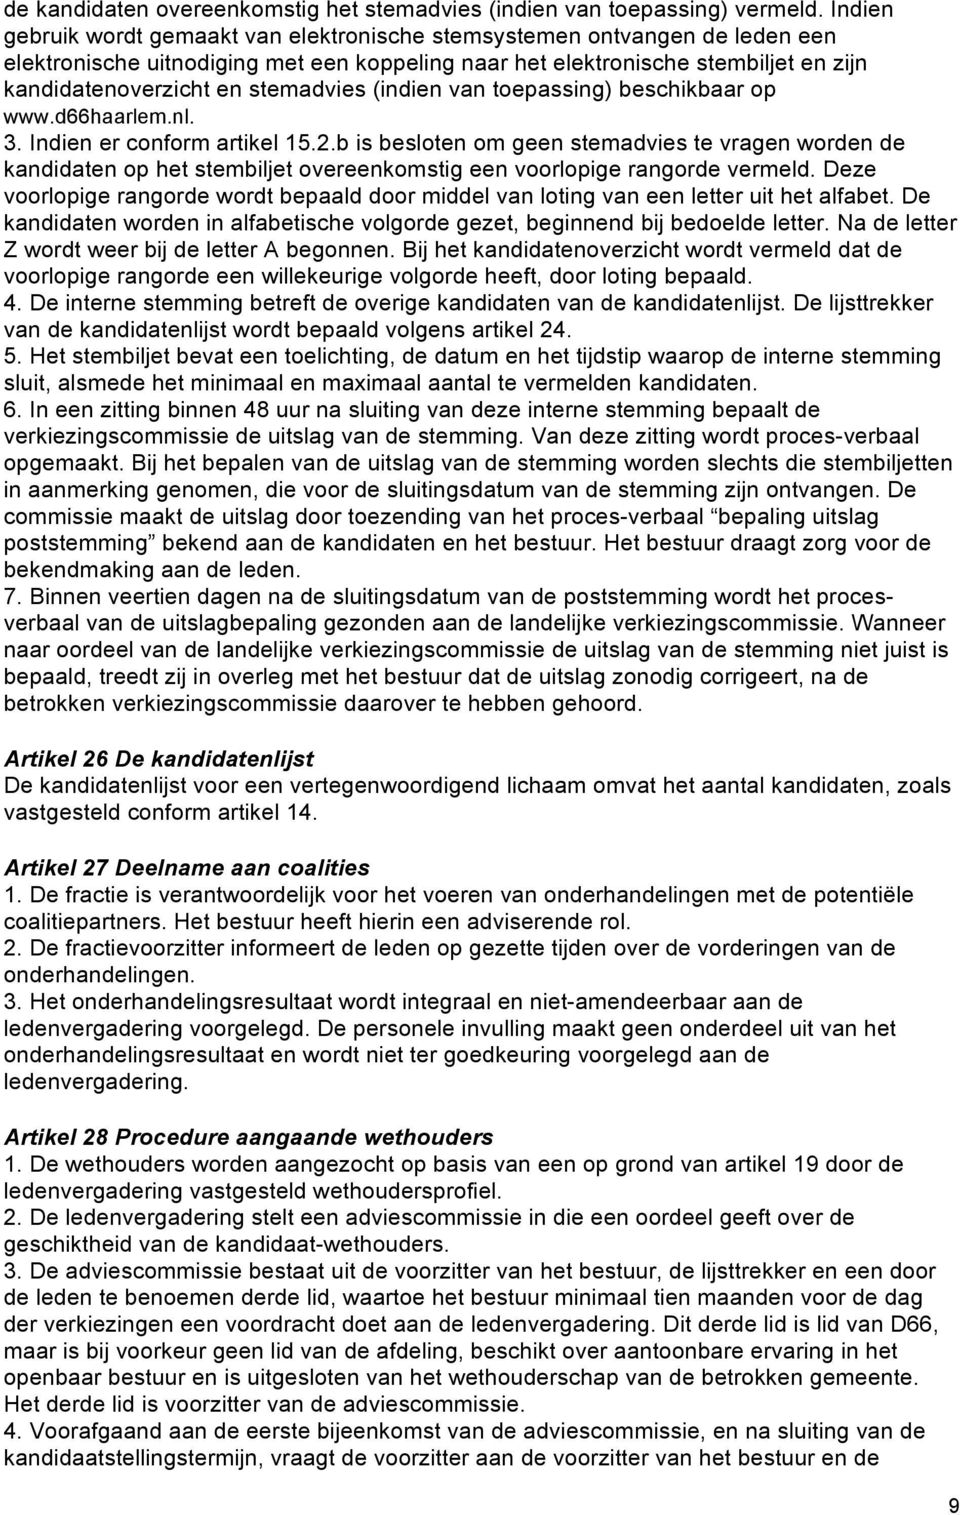 stemadvies (indien van toepassing) beschikbaar op www.d66haarlem.nl. 3. Indien er conform artikel 15.2.